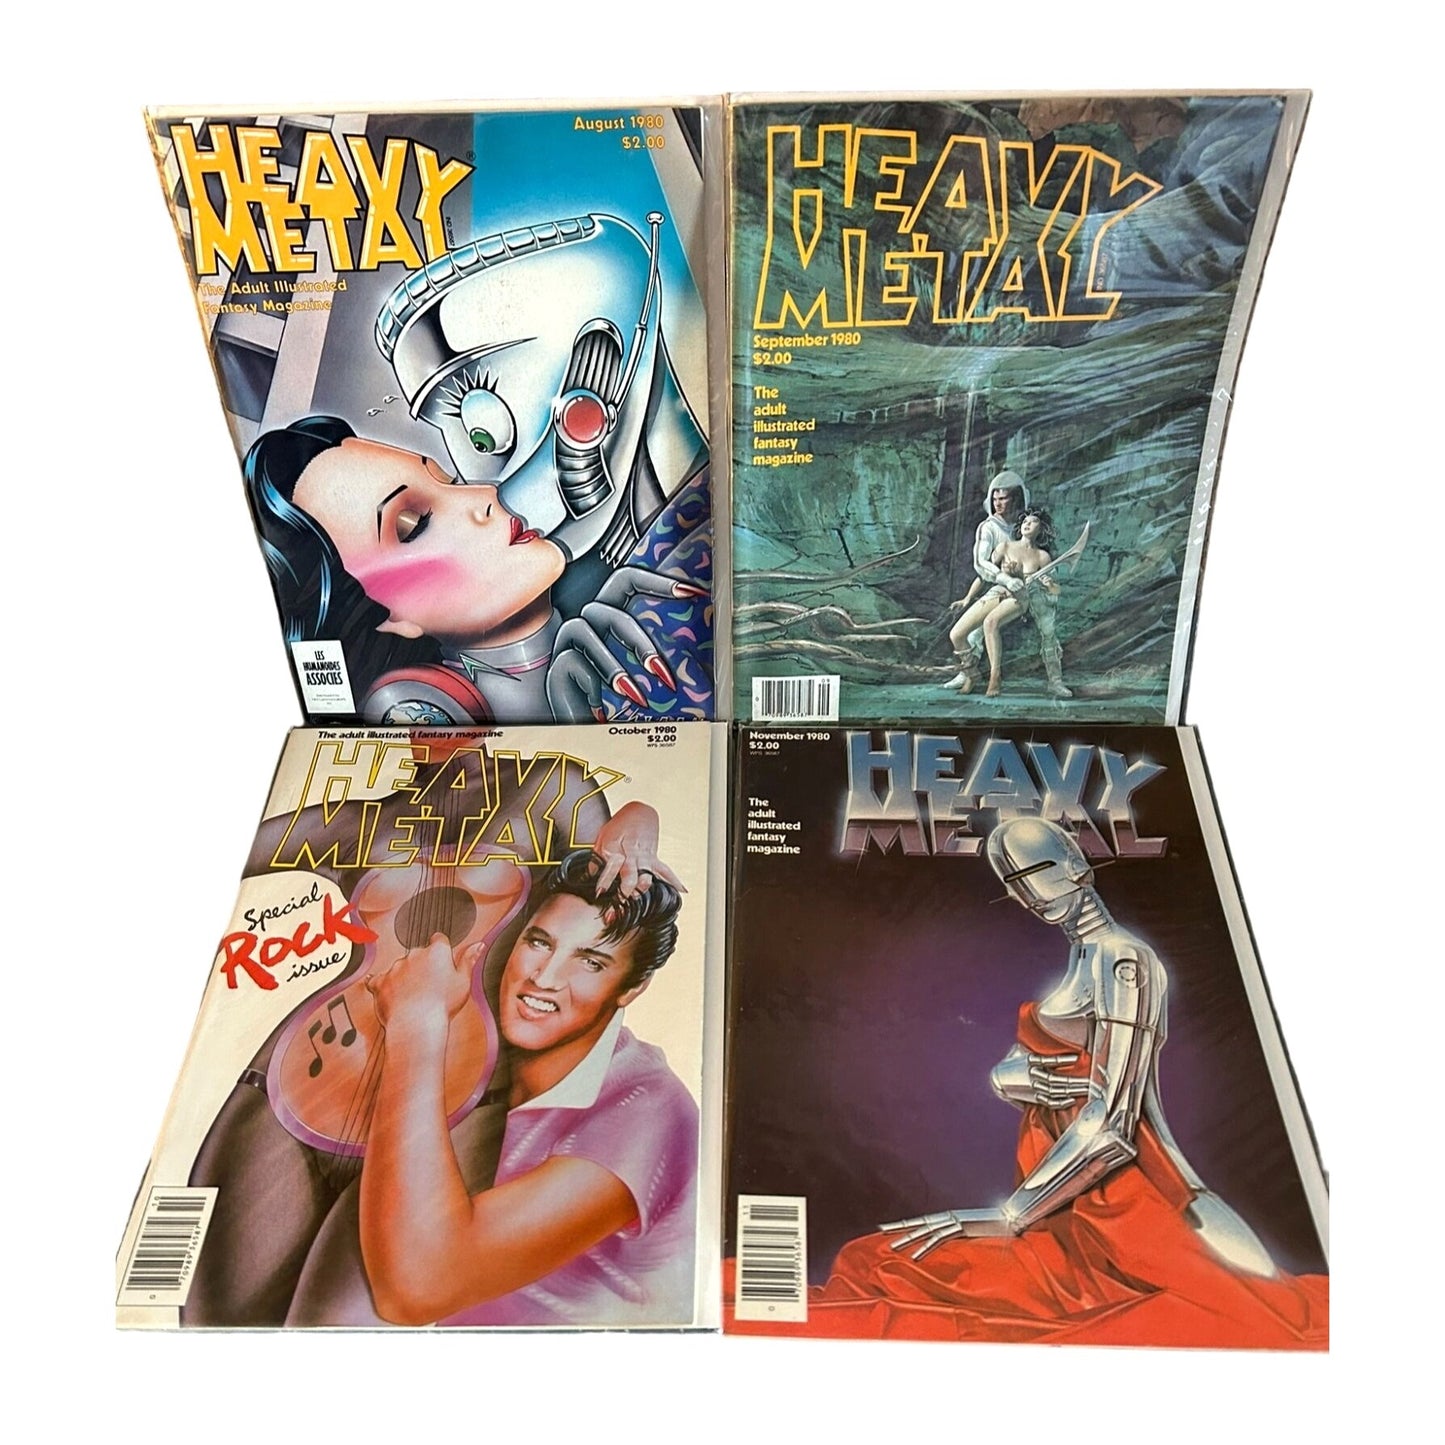 Heavy Metal Magazine - Full Run Apr. 1977 - July 1981 #1-52 Ex. Cond. Boarded